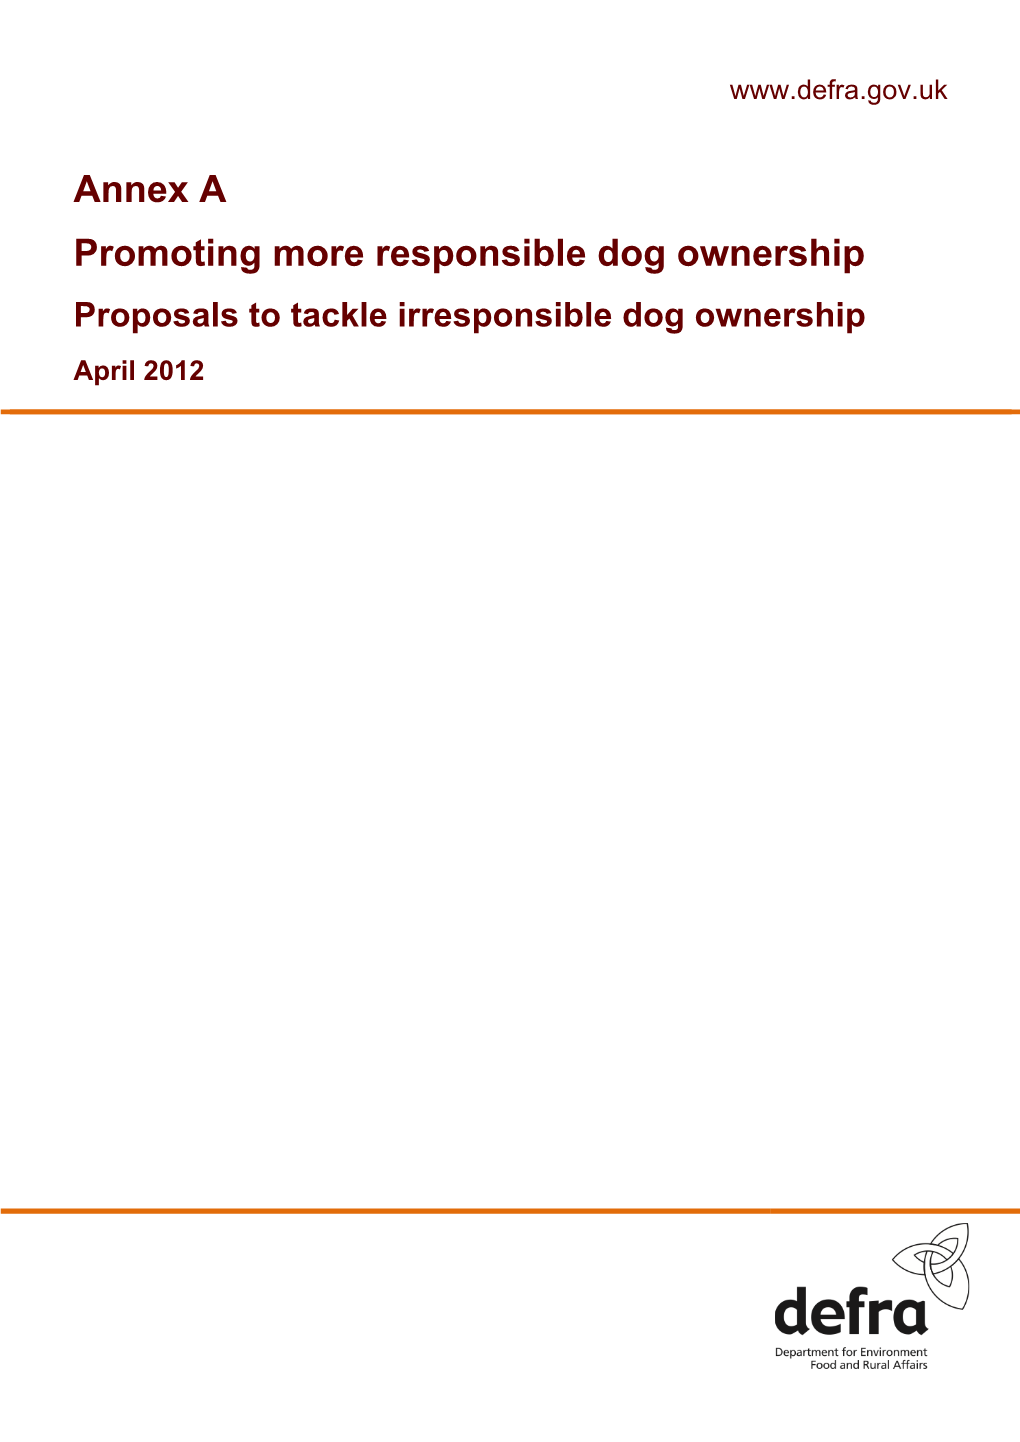 Proposals to Tackle Irresponsible Dog Ownership April 2012